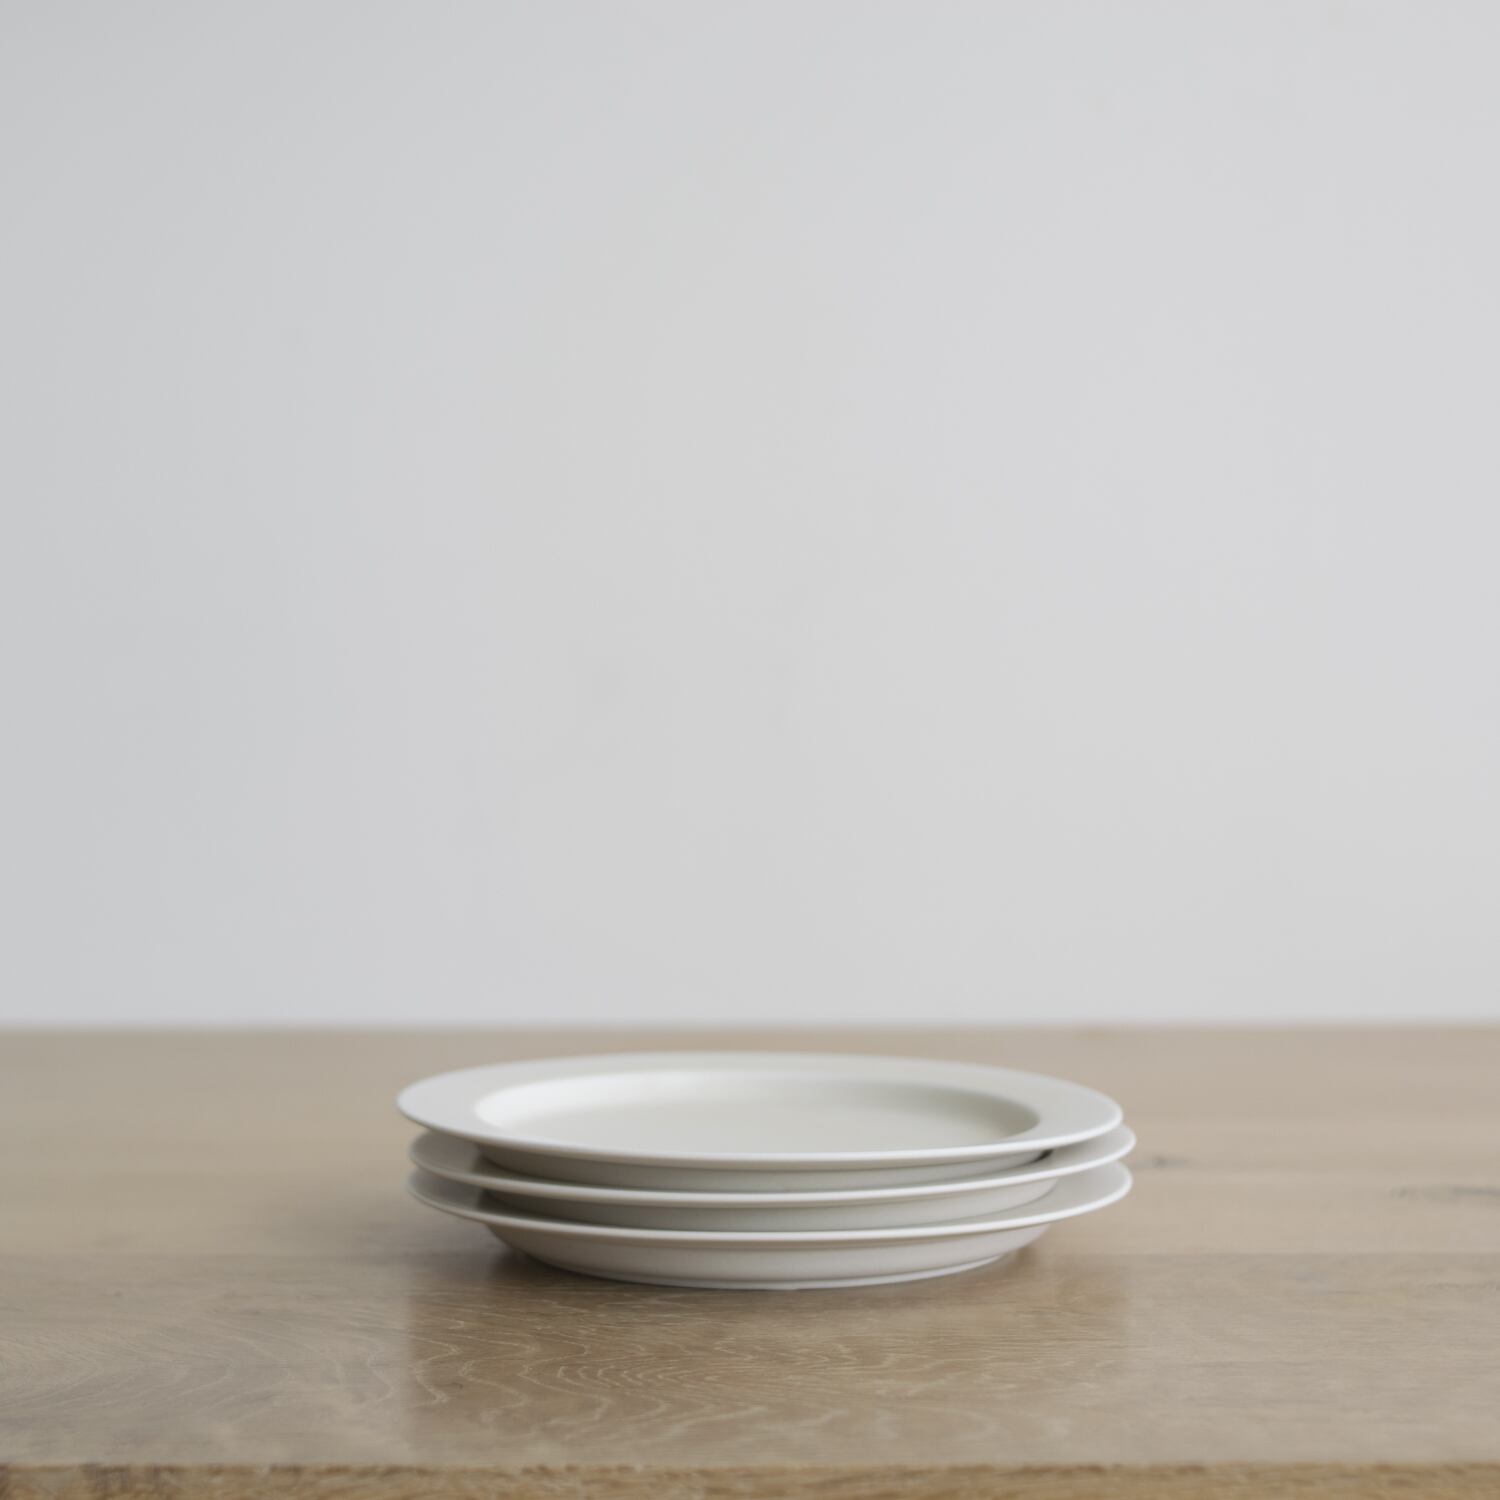 yumiko iihoshi porcelain / unjour / apres midi plate (plate M 